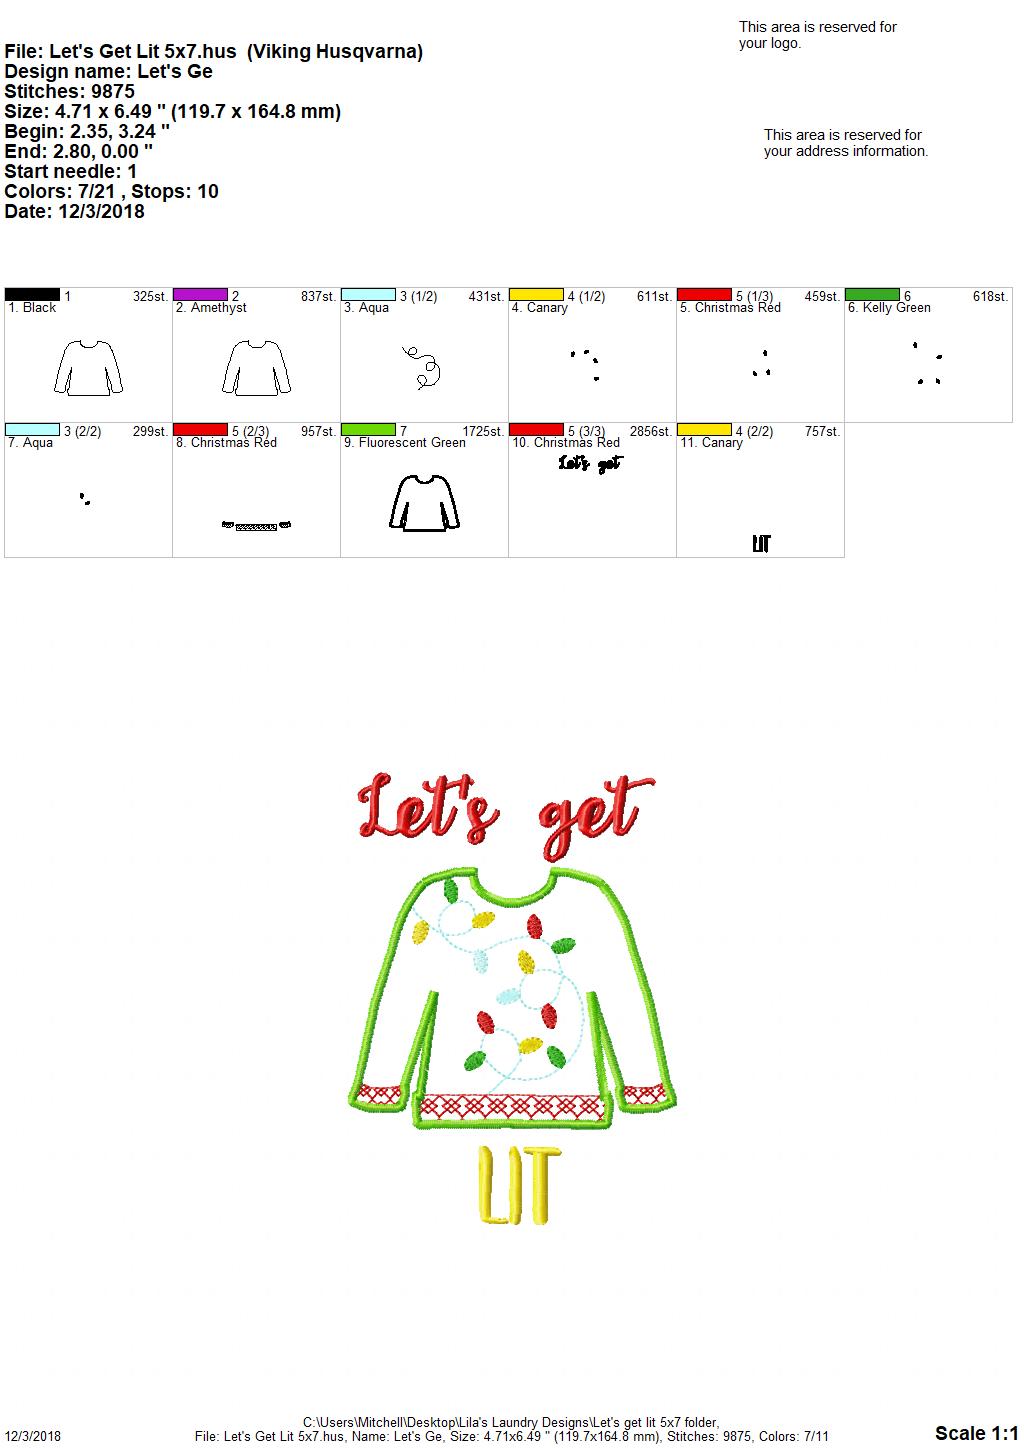 Let's Get Lit Applique - 5x7 - Digital Embroidery Design